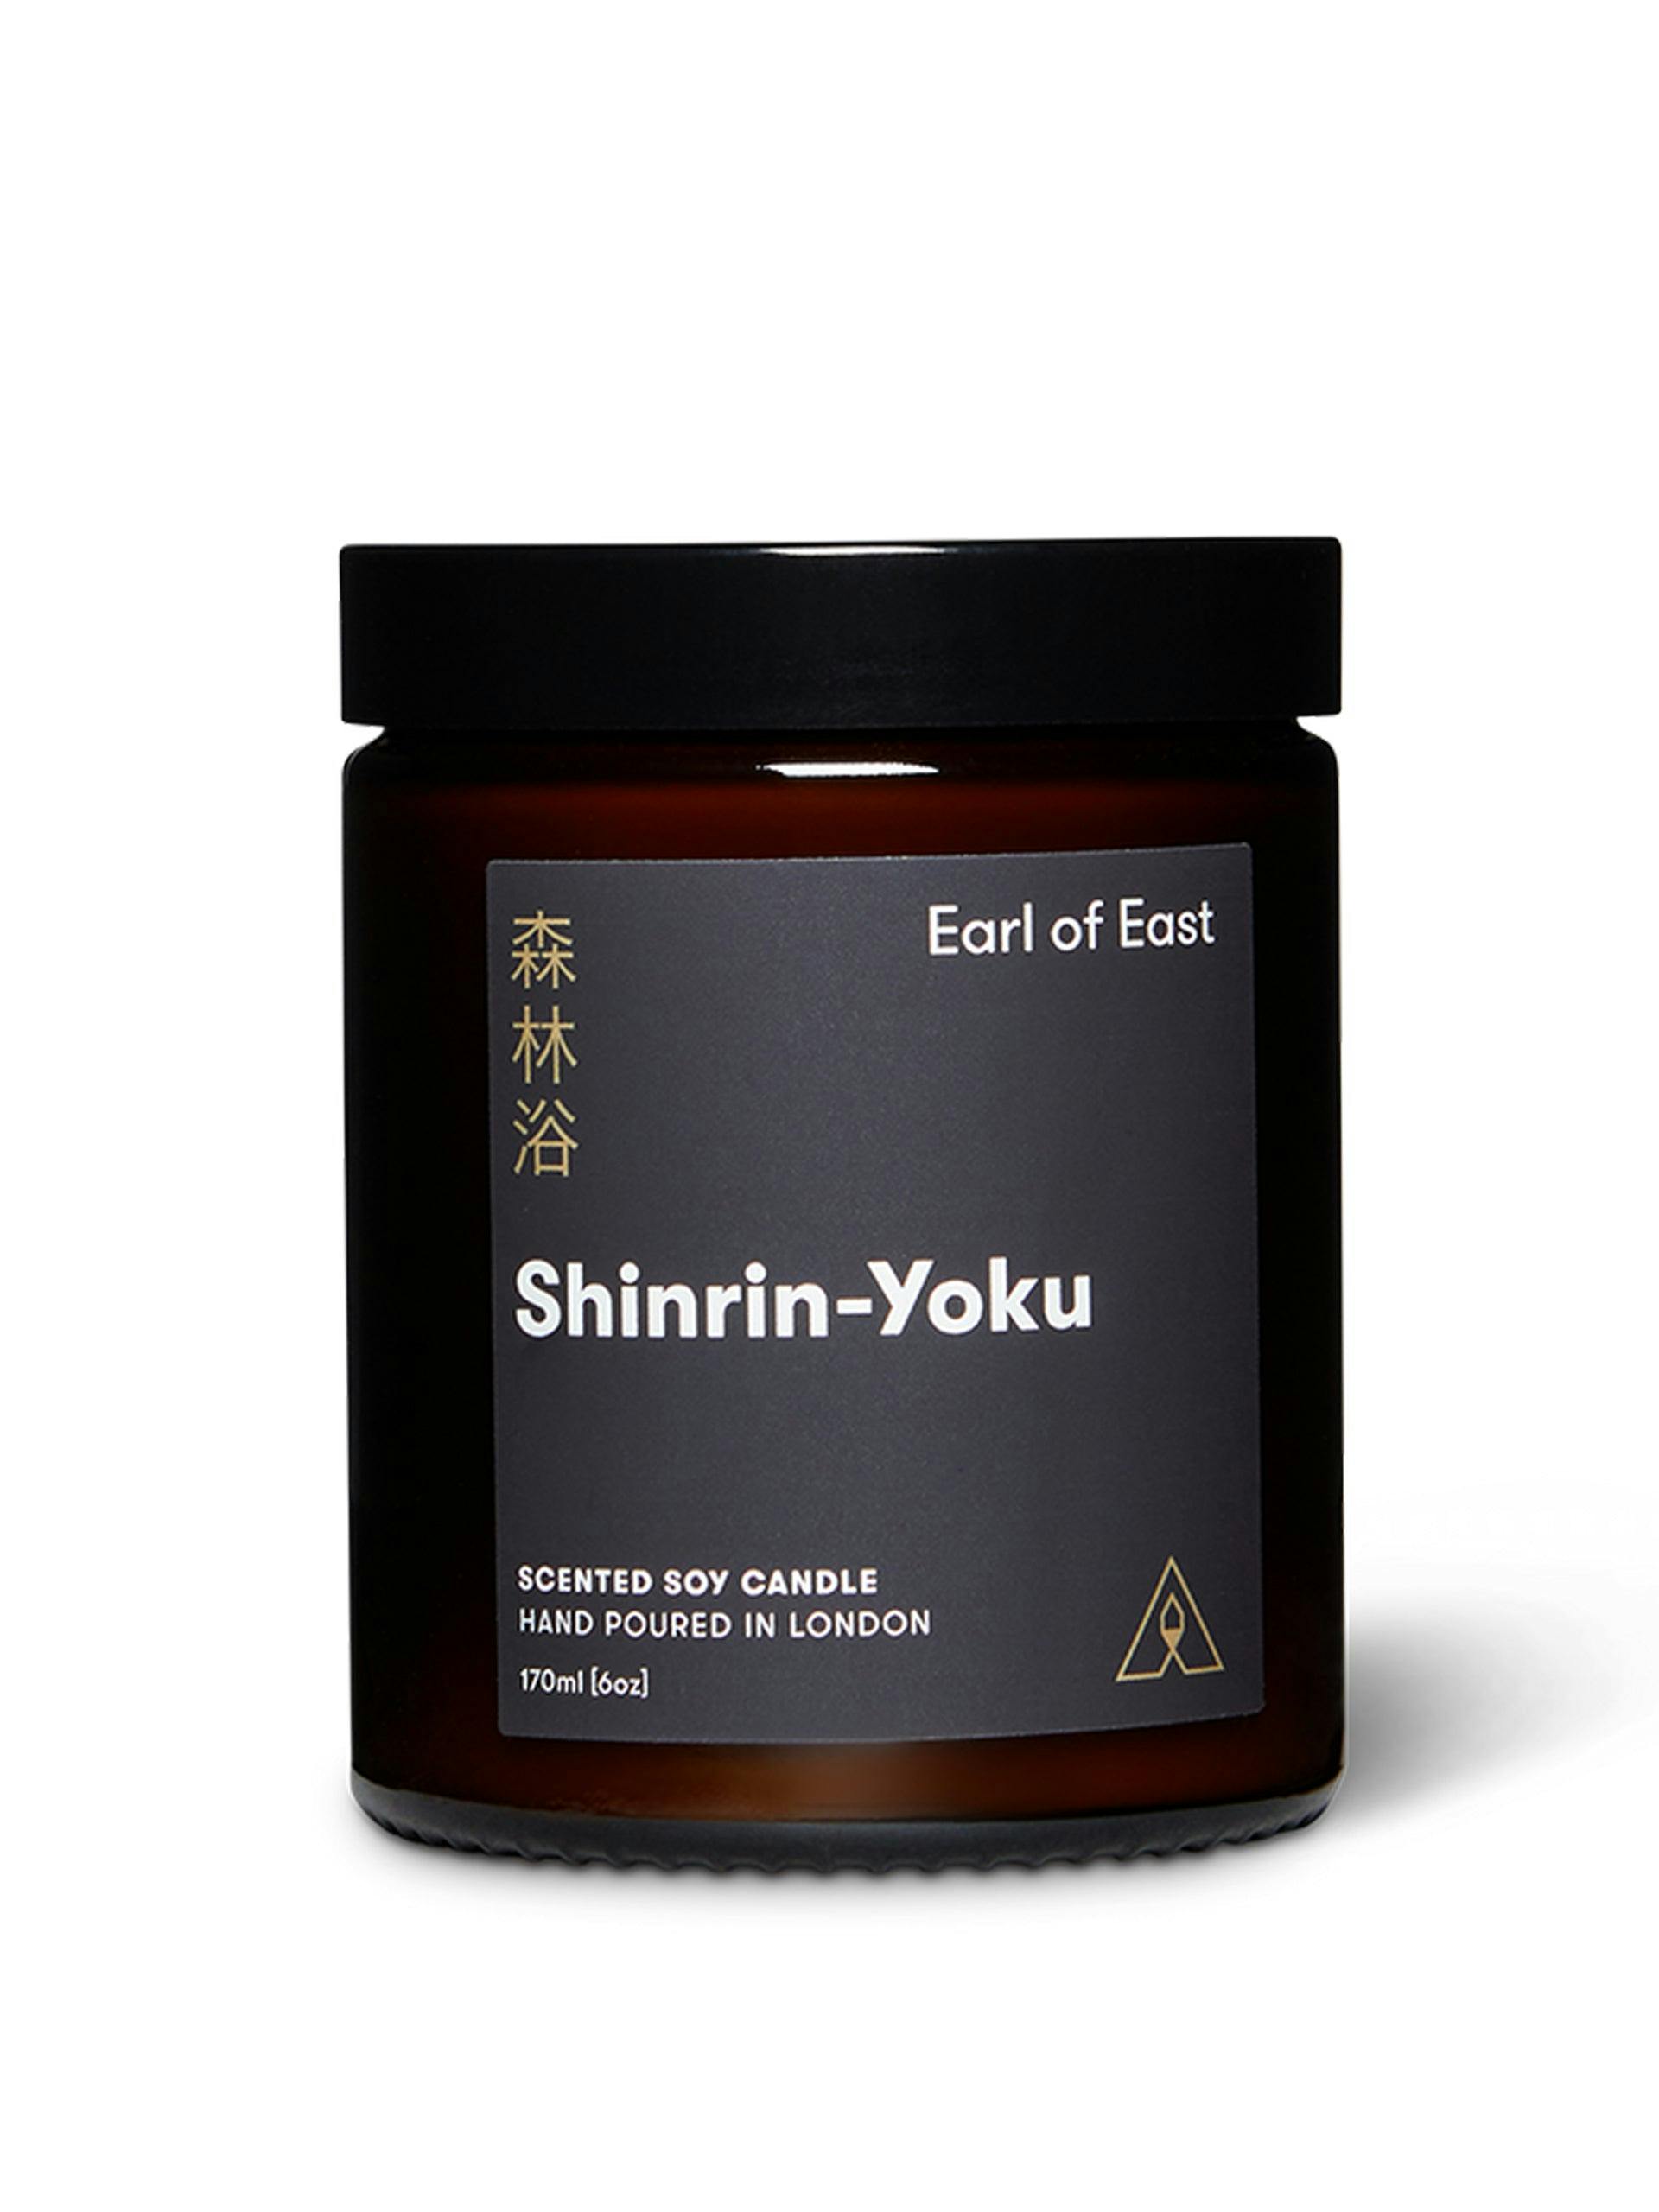 Shinrin-Yoku scented soy candle